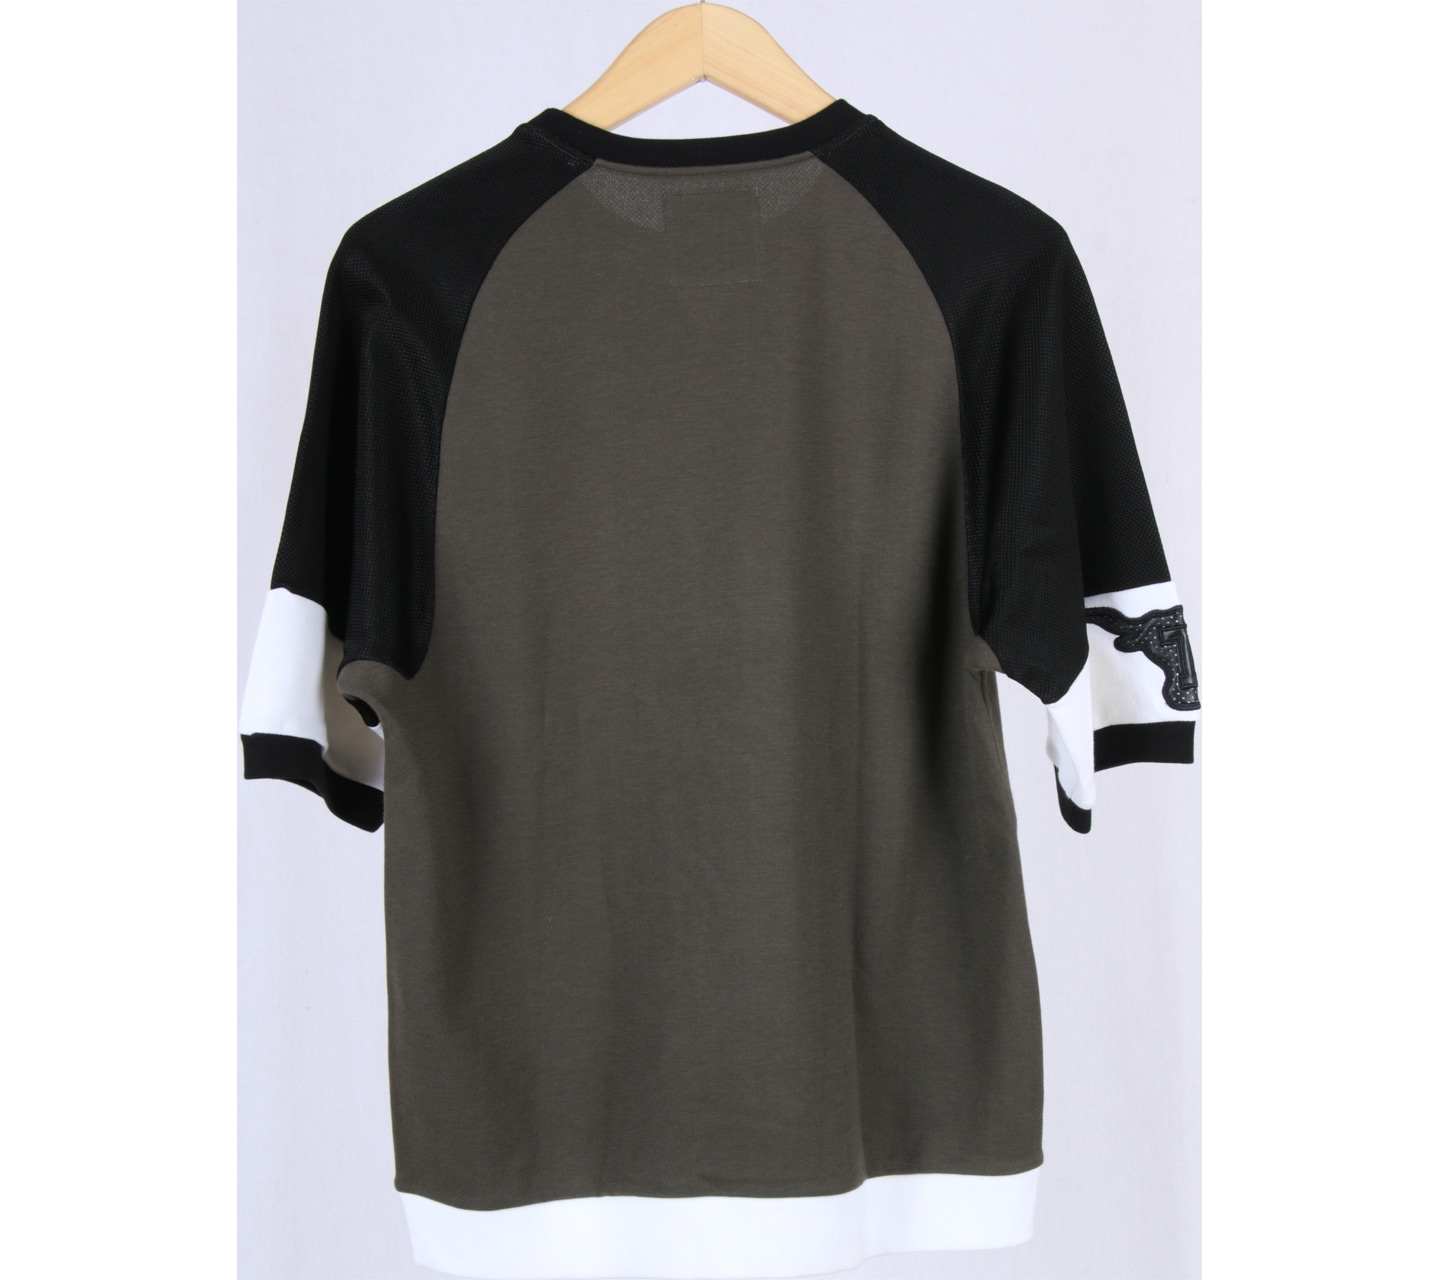 Toreau Dark Green And Black T-Shirt